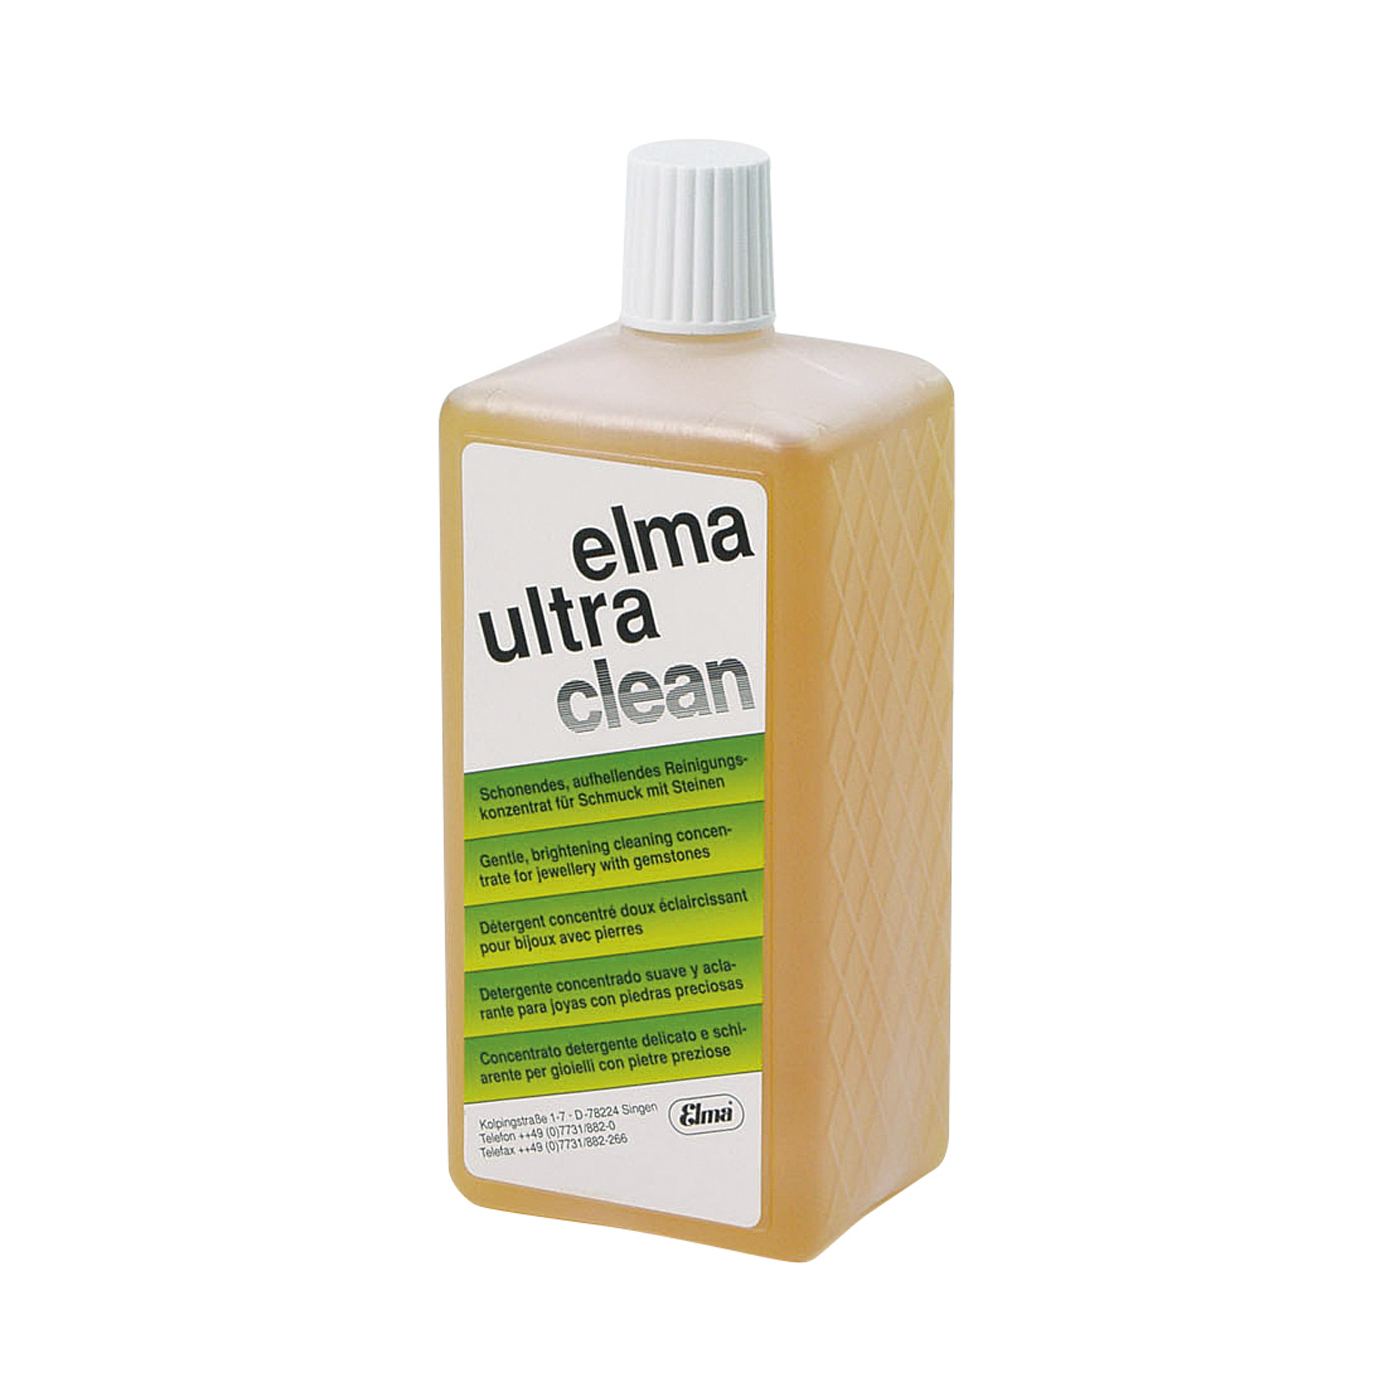 Elma Schmidbauer ultra clean Reinigungslösung, 1000 ml - 1000 ml